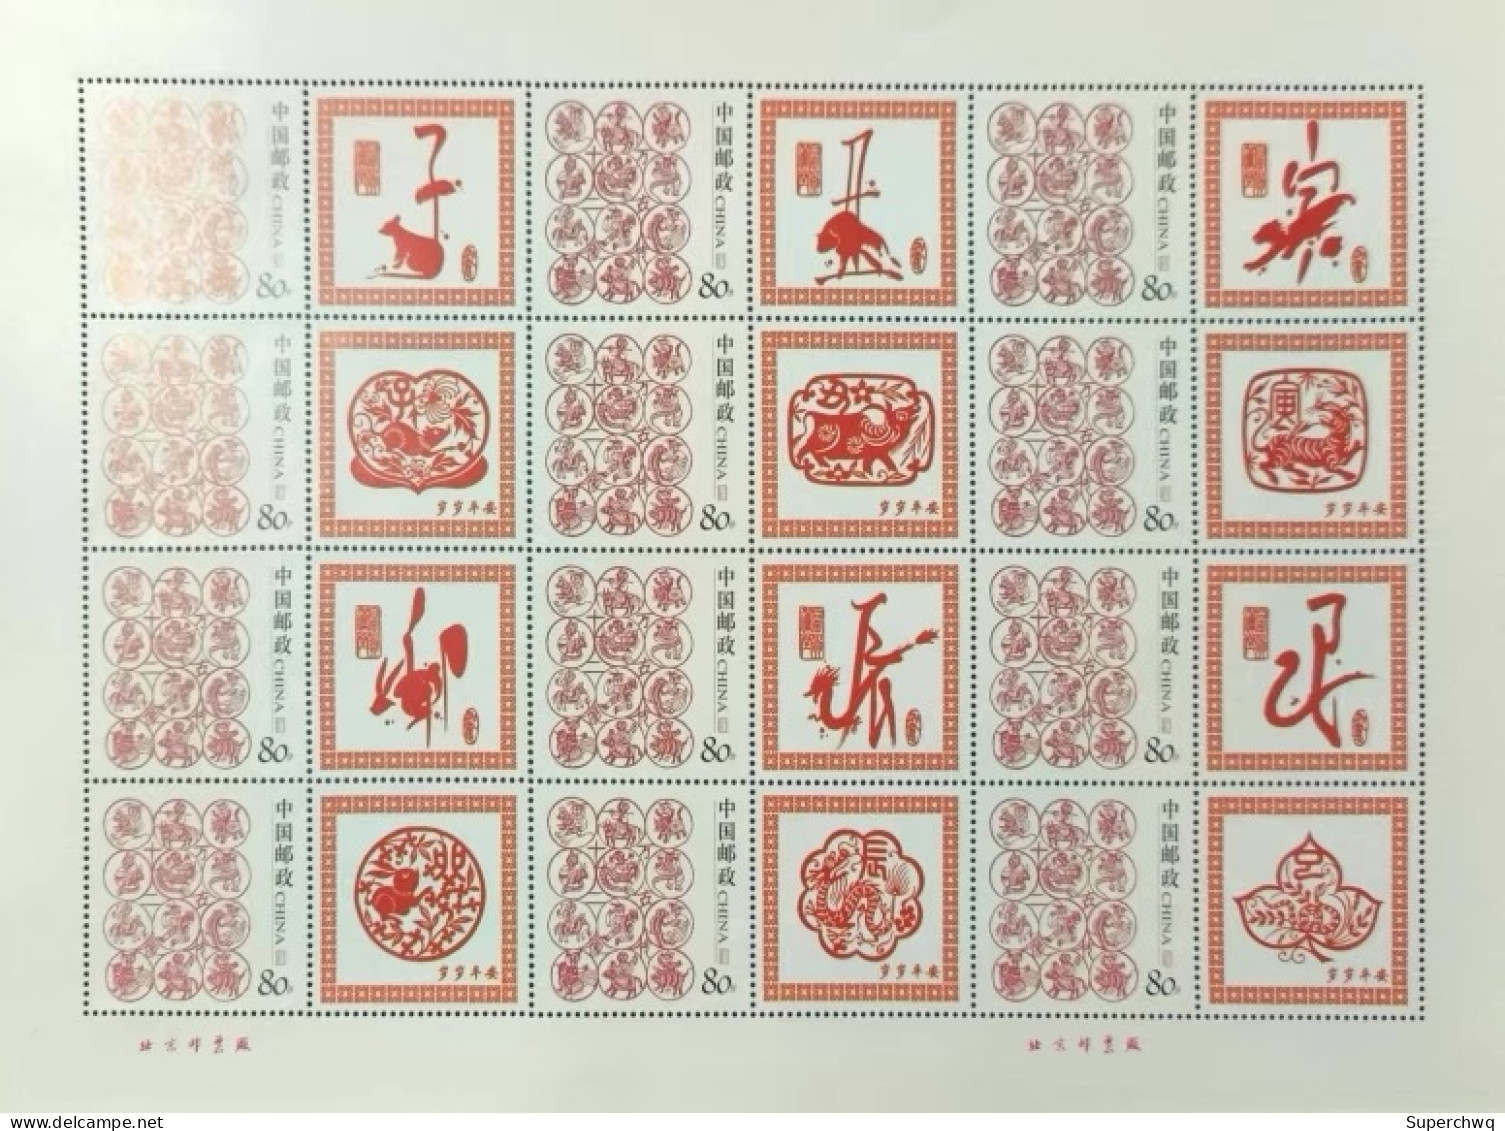 China Personalized Stamp  MS MNH,Paper Cuttings Of The Chinese Zodiac - Neufs